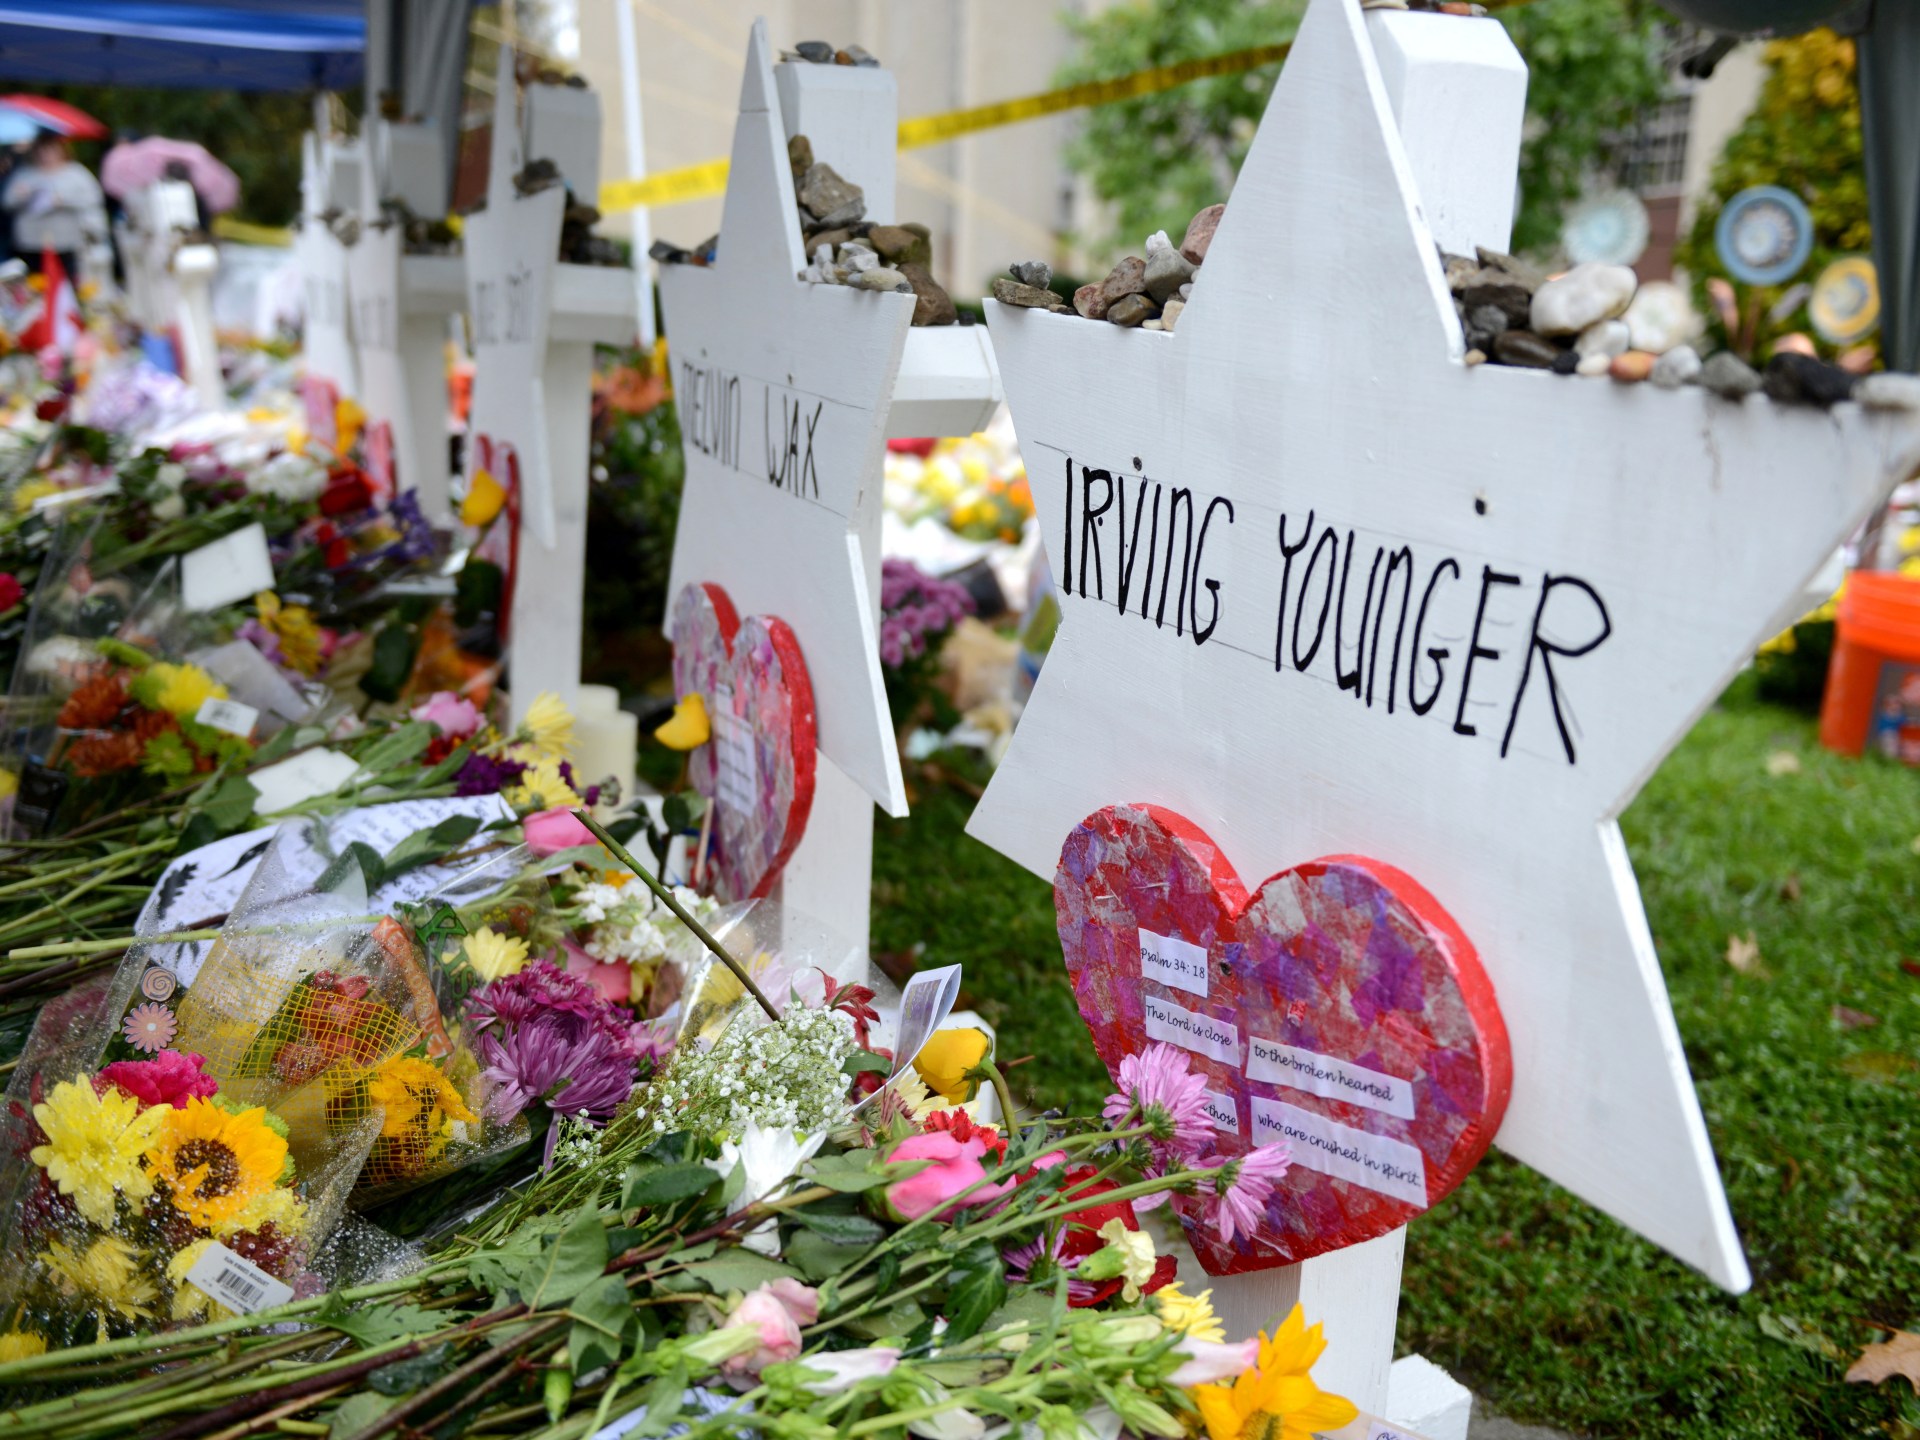 Penembak sinagoga Pittsburgh Robert Bowers yang membunuh 11 orang dijatuhi hukuman mati |  Berita Kekerasan Senjata